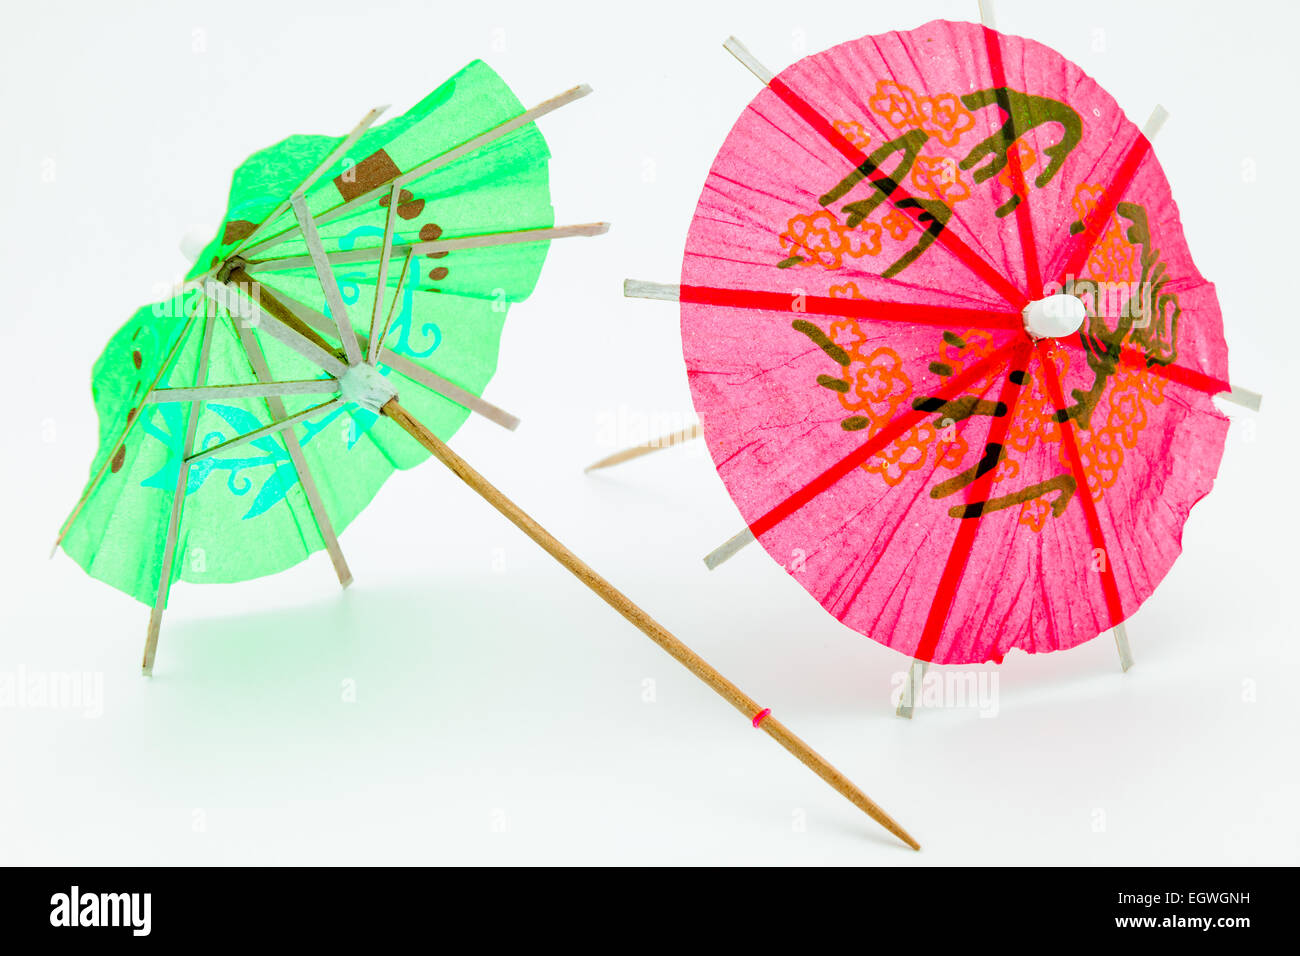 Two cocktail umbrellas on a white background Stock Photo